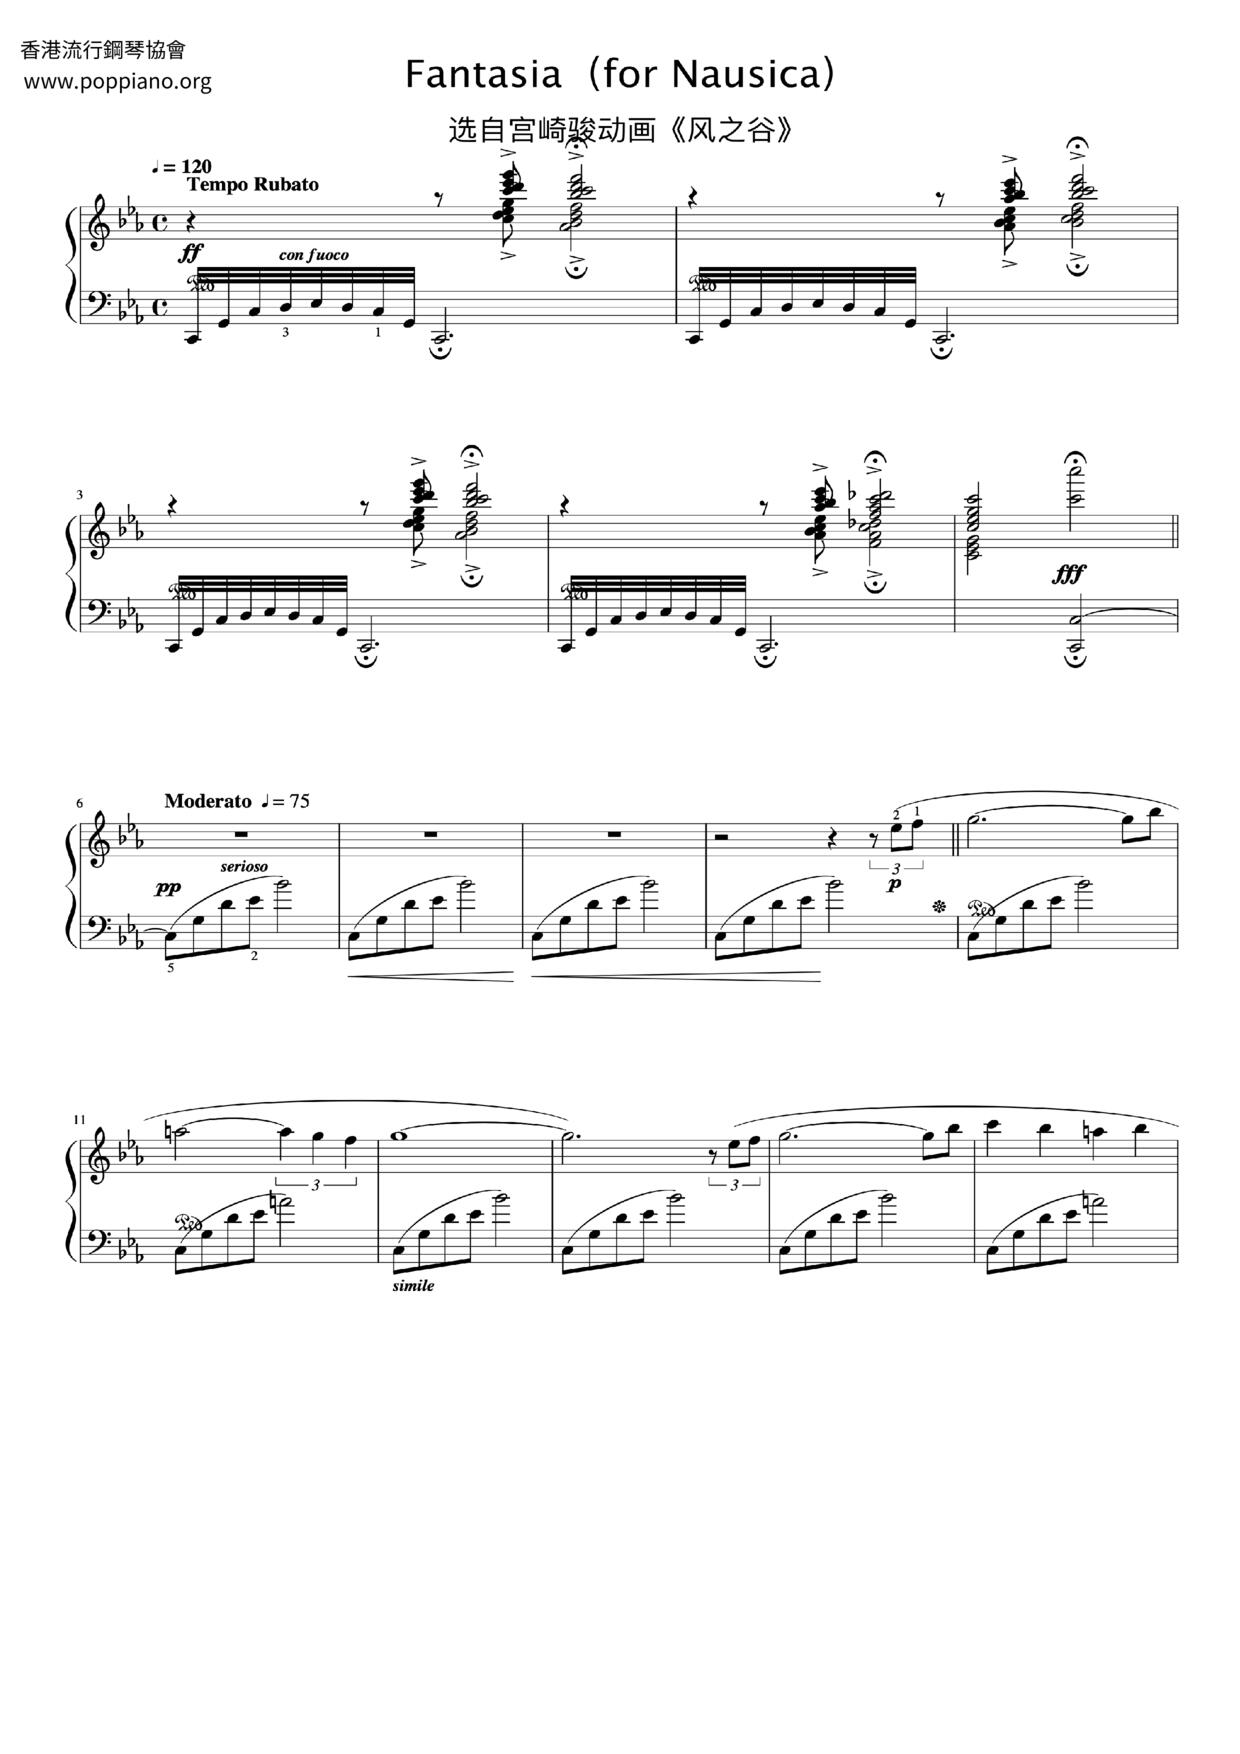 Fantasia Score